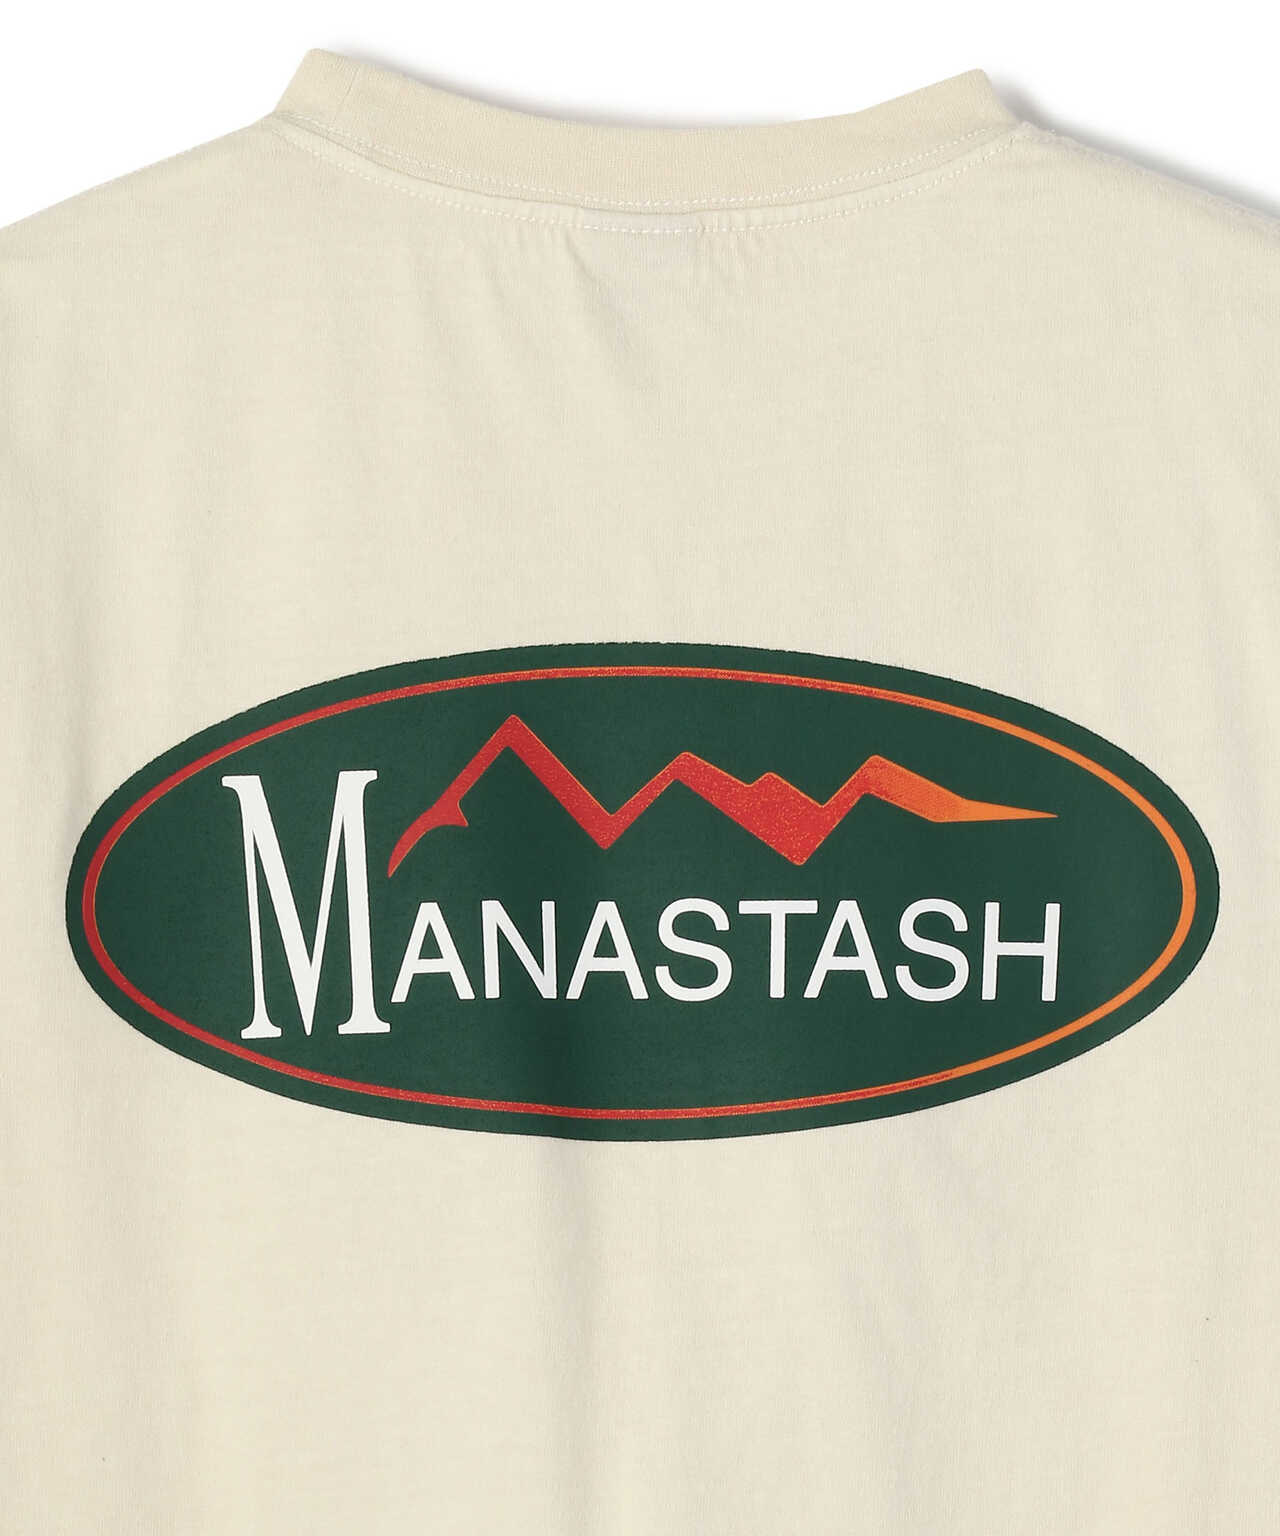 MANASTASH/マナスタッシュ/Re:CTN OVAL LOGO TEE/ロゴTシャツ